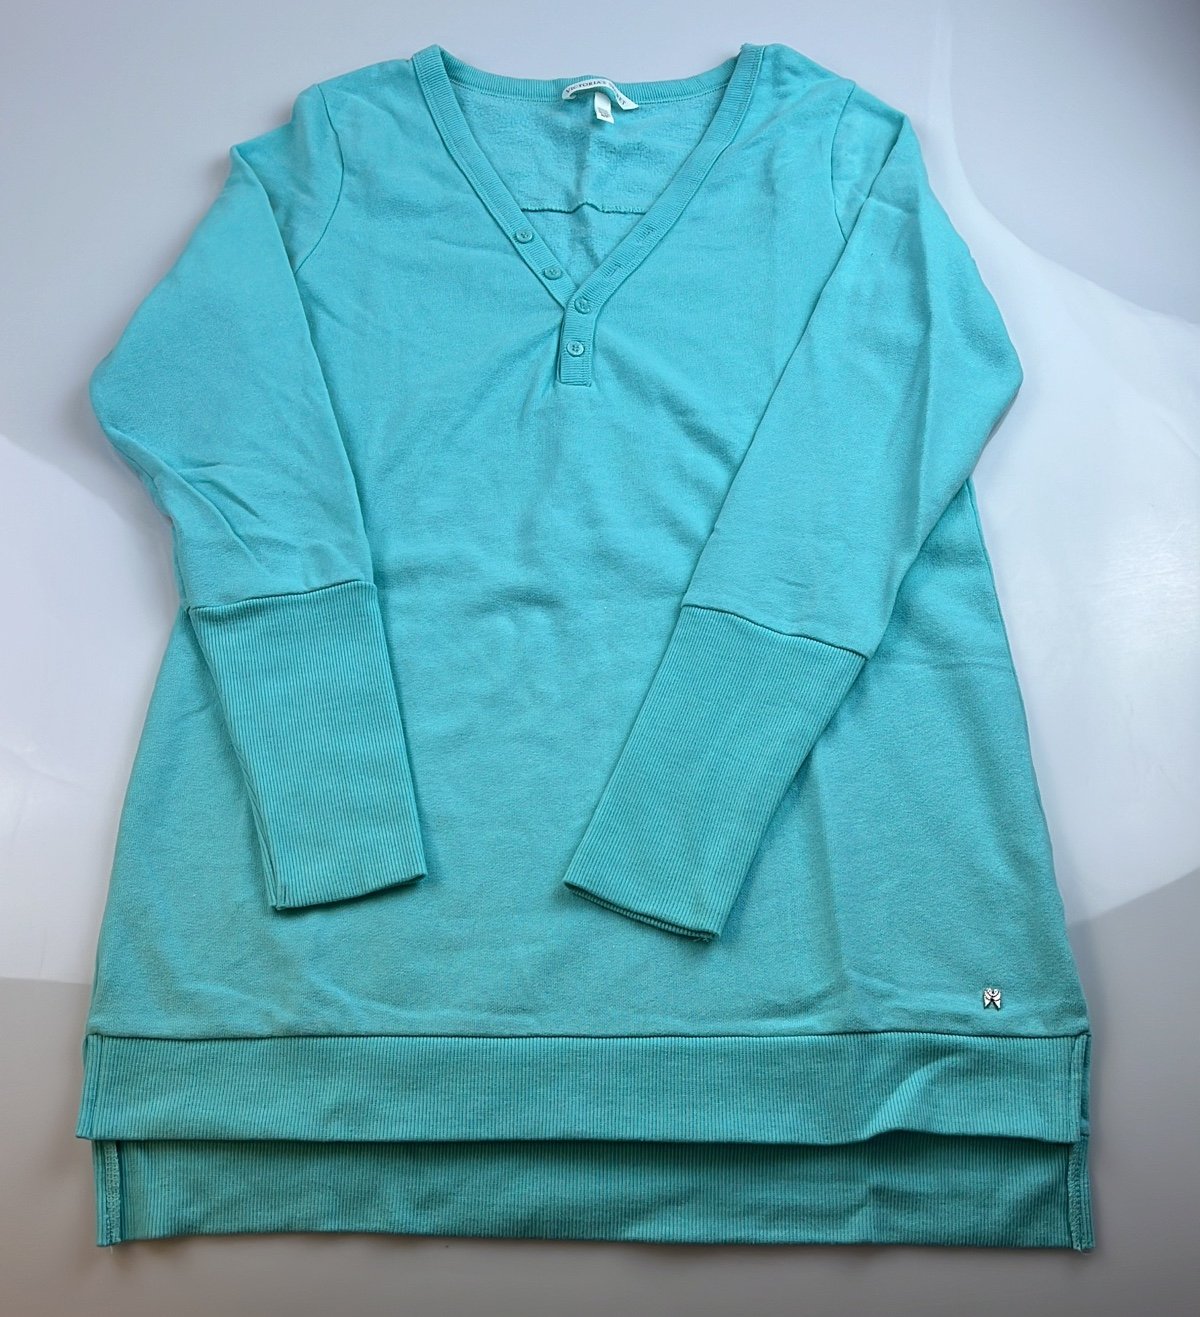 Buy Victoria’s Secret Blue Sleepshirt S2-44 hXDquJbN5 Fashion